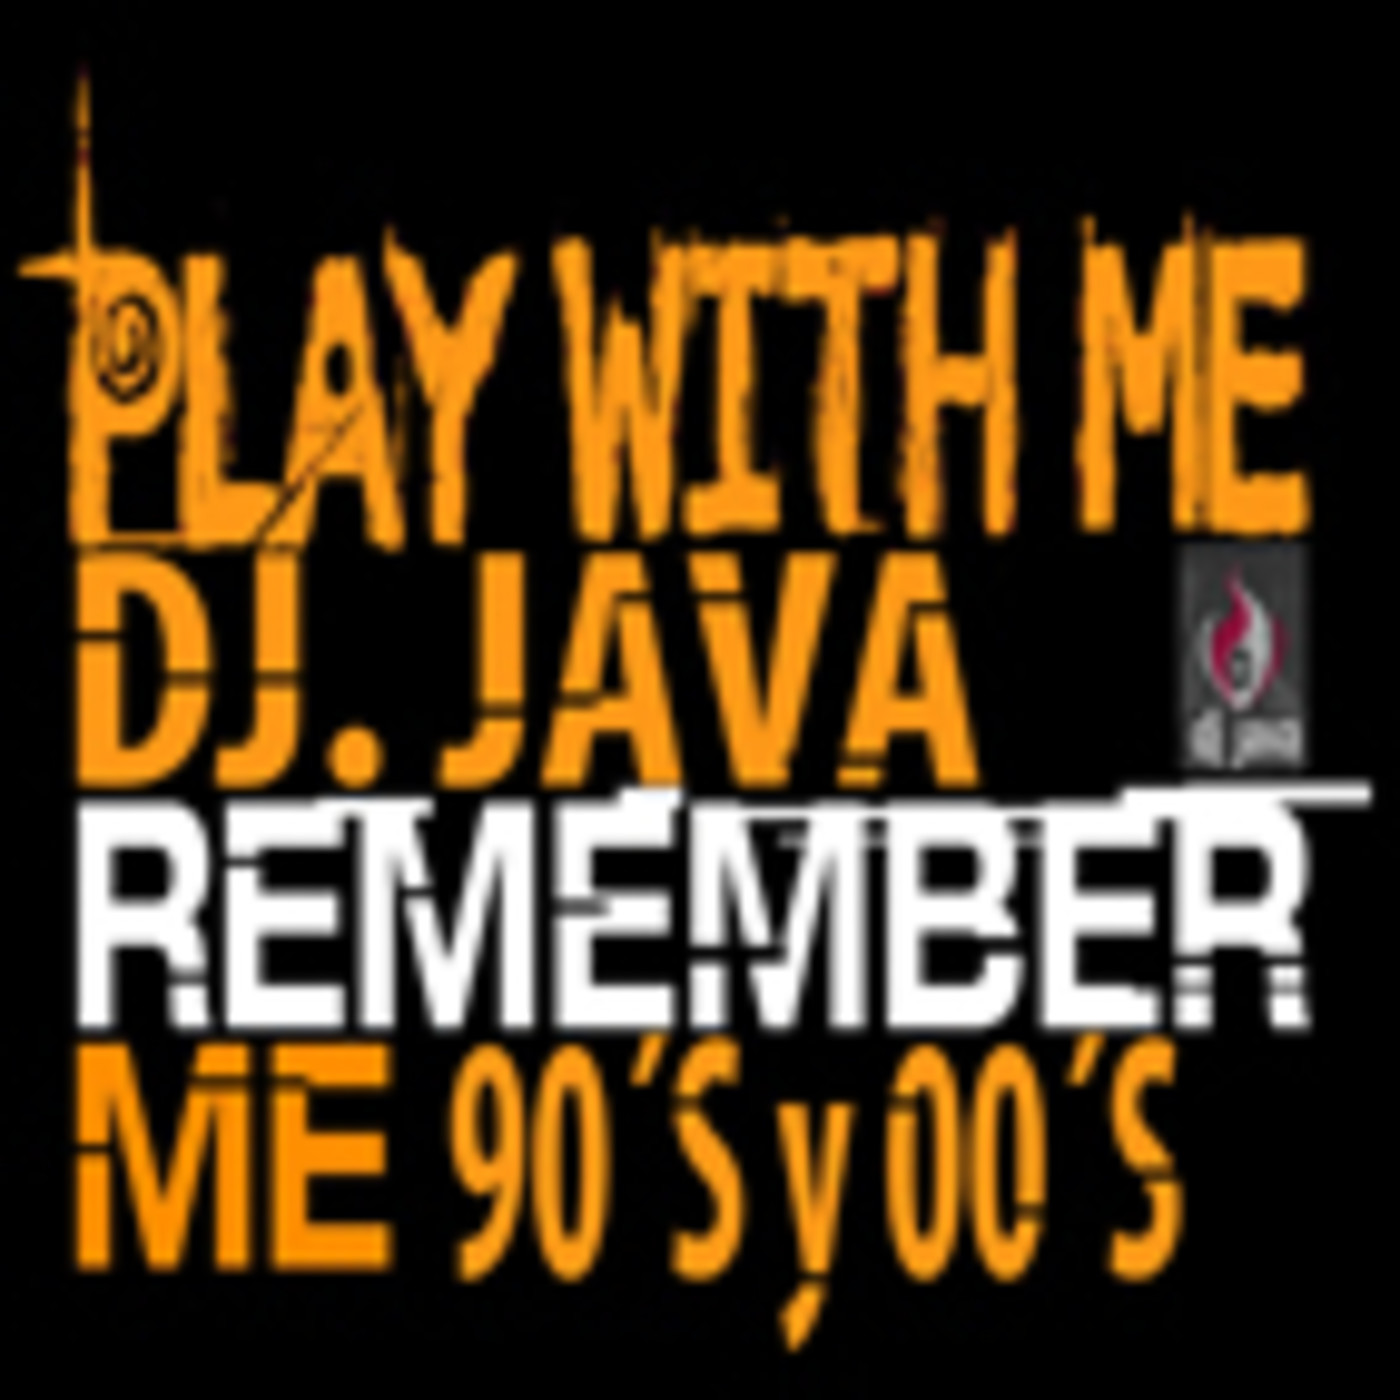 Podcast:Play with me 249 - Acceso anticipado:Dj Java